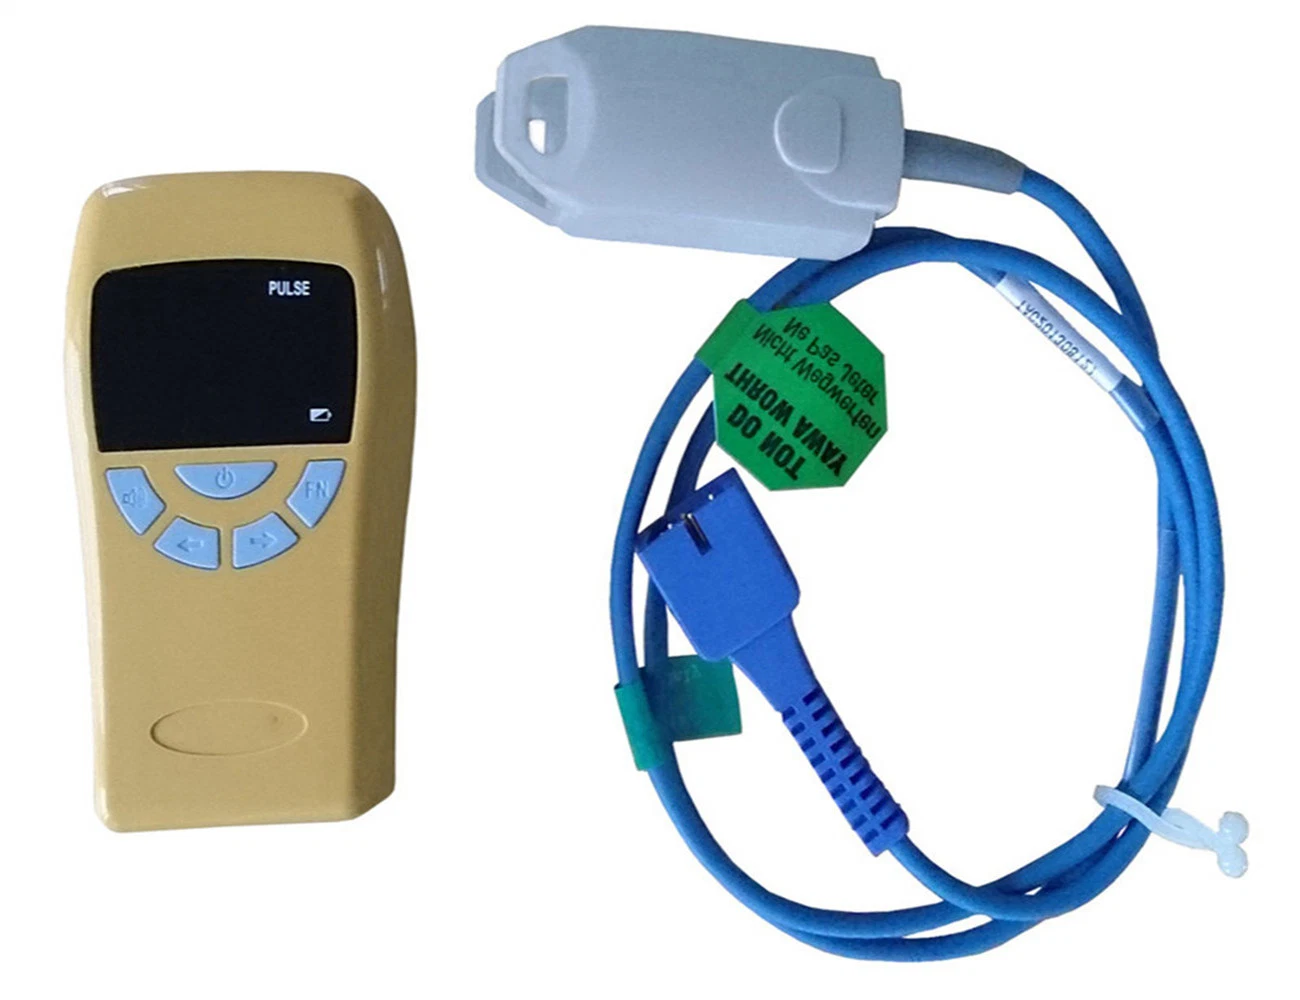 Hot Selling Handheld Pulse Oximeter as Medical Fingertip Finger Clip OLED Pulse Oxymeter Oximeter Monitor Smart LED Screen Veterinary Pulse Oximeter